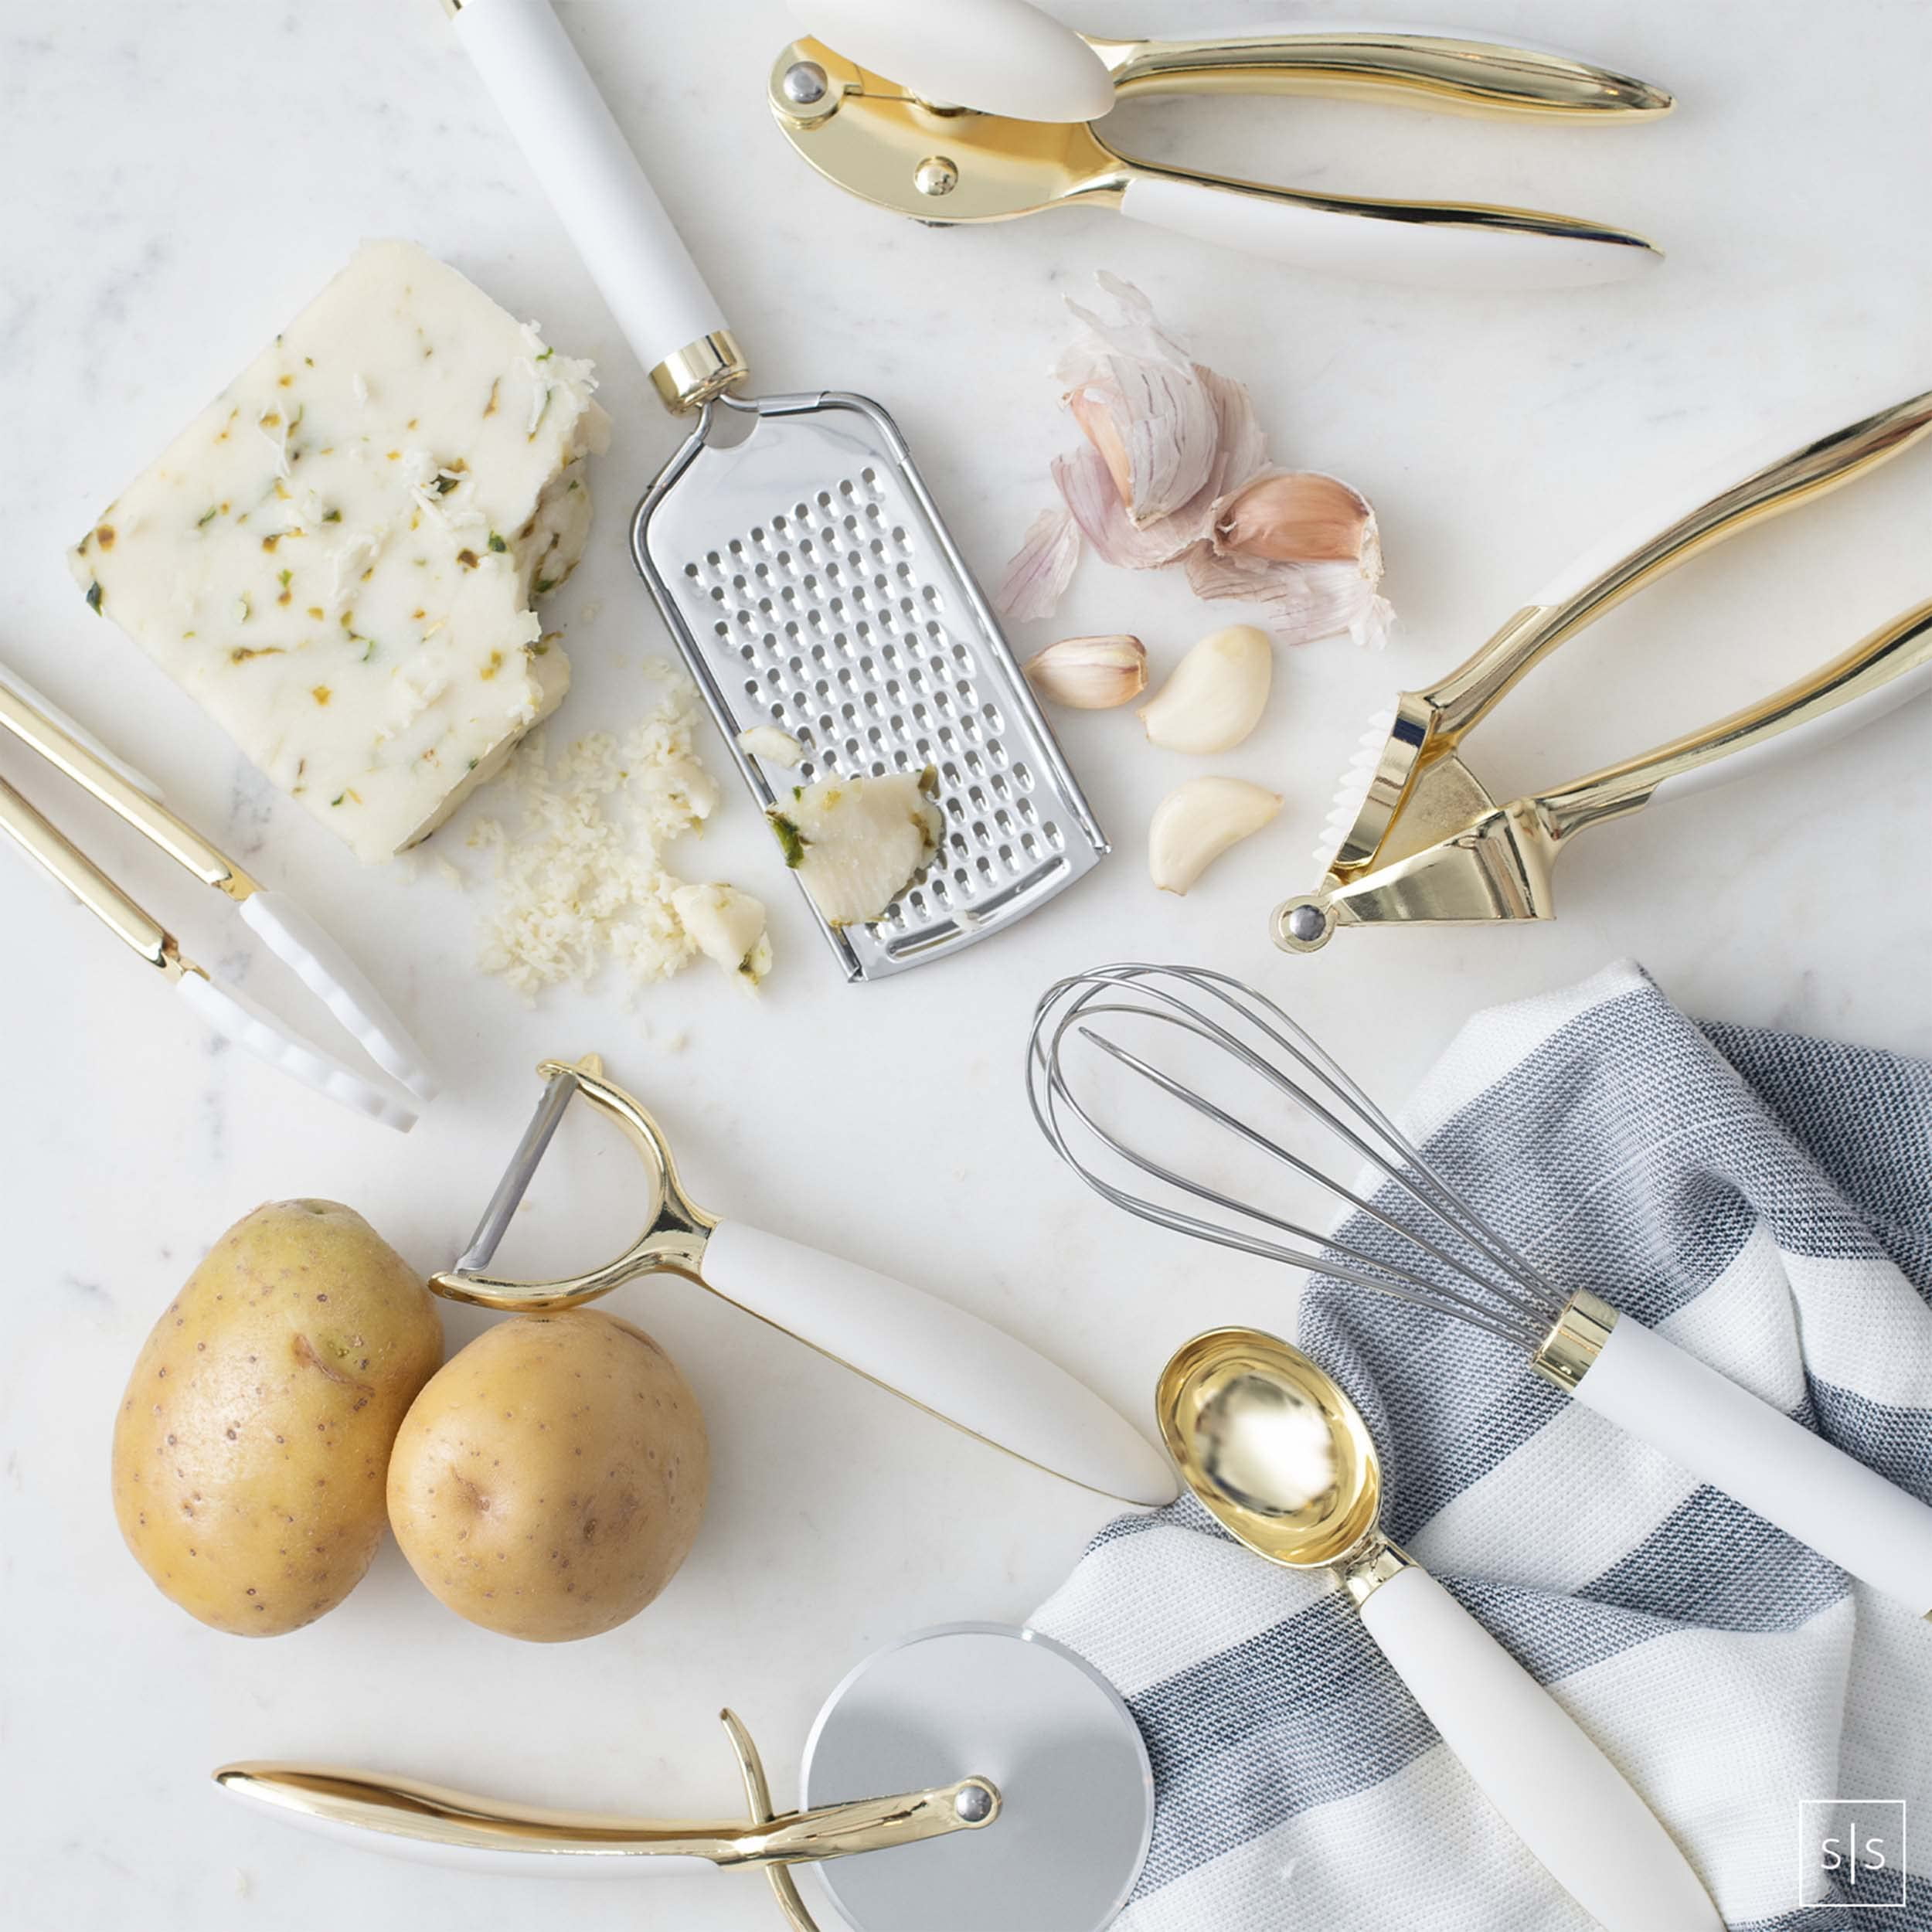 White and Brassy Gold Kitchen Utensils Set with Holder